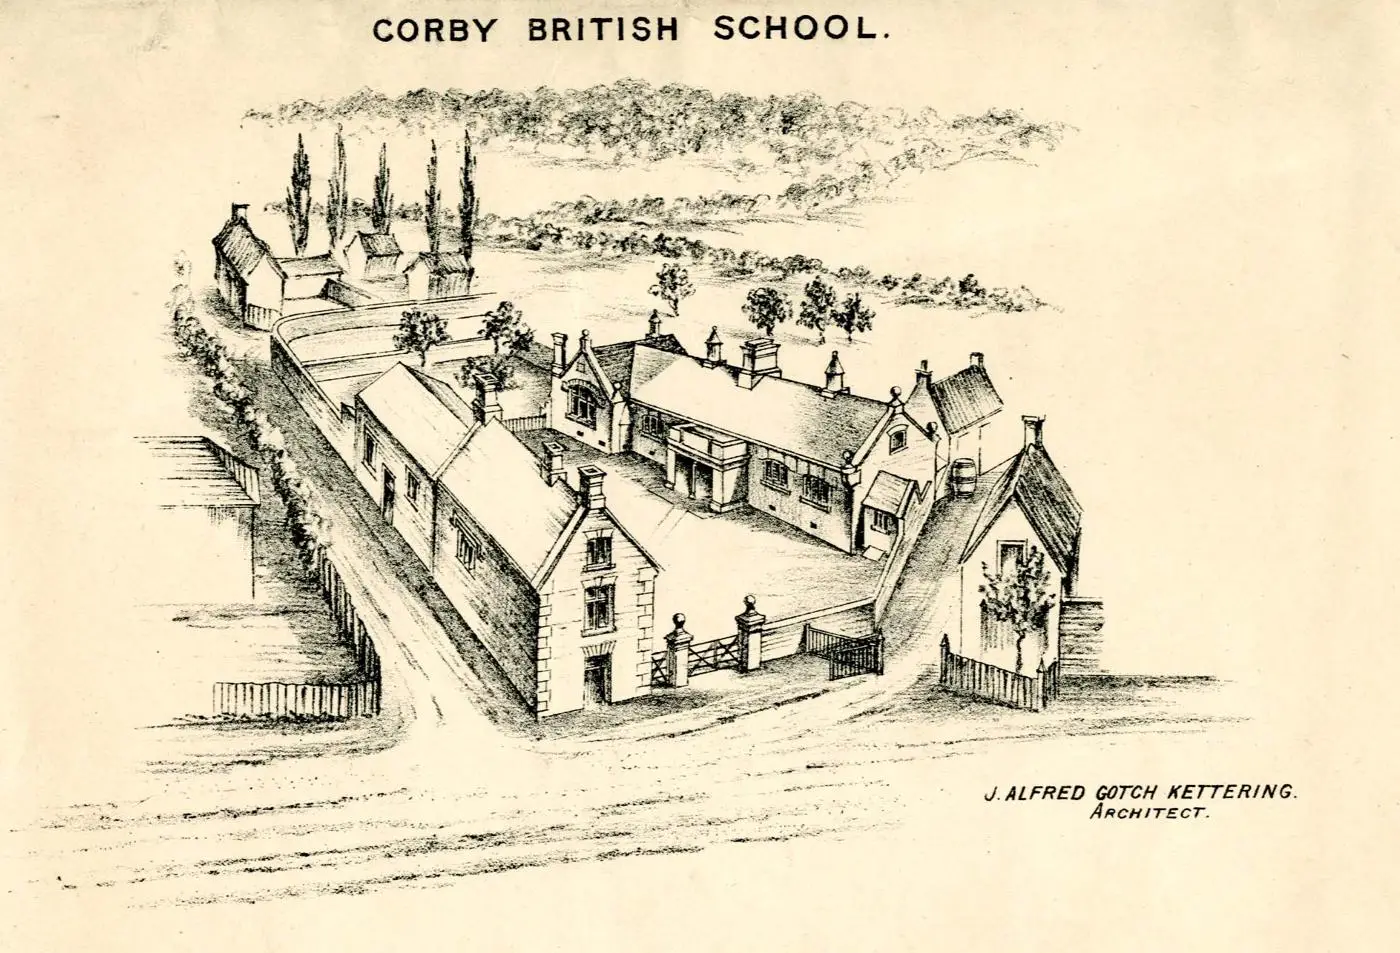 Corby British School